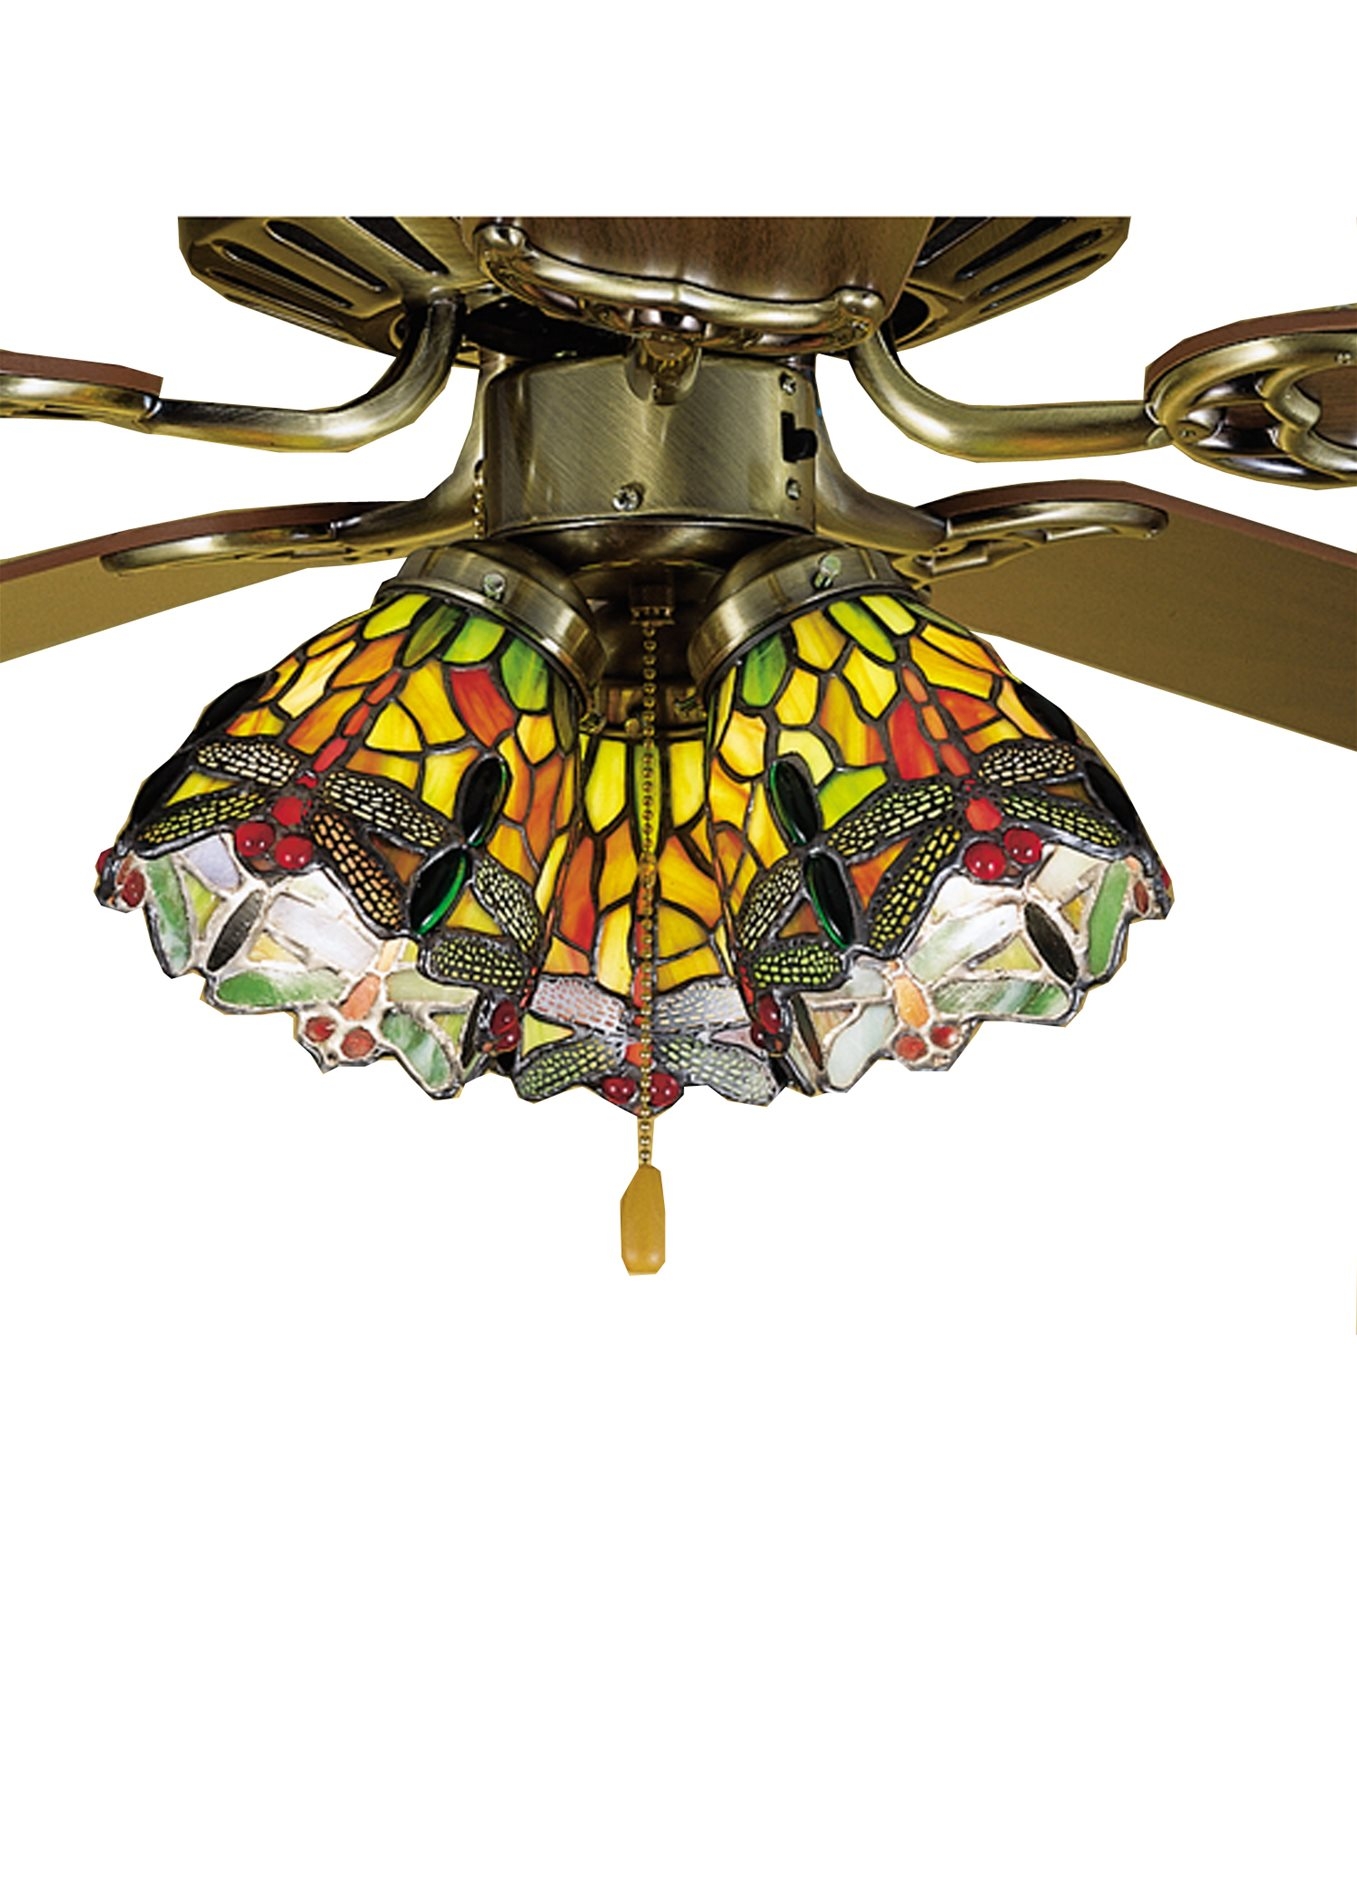 Tiffany hanginghead dragonfly fan light shade jpg